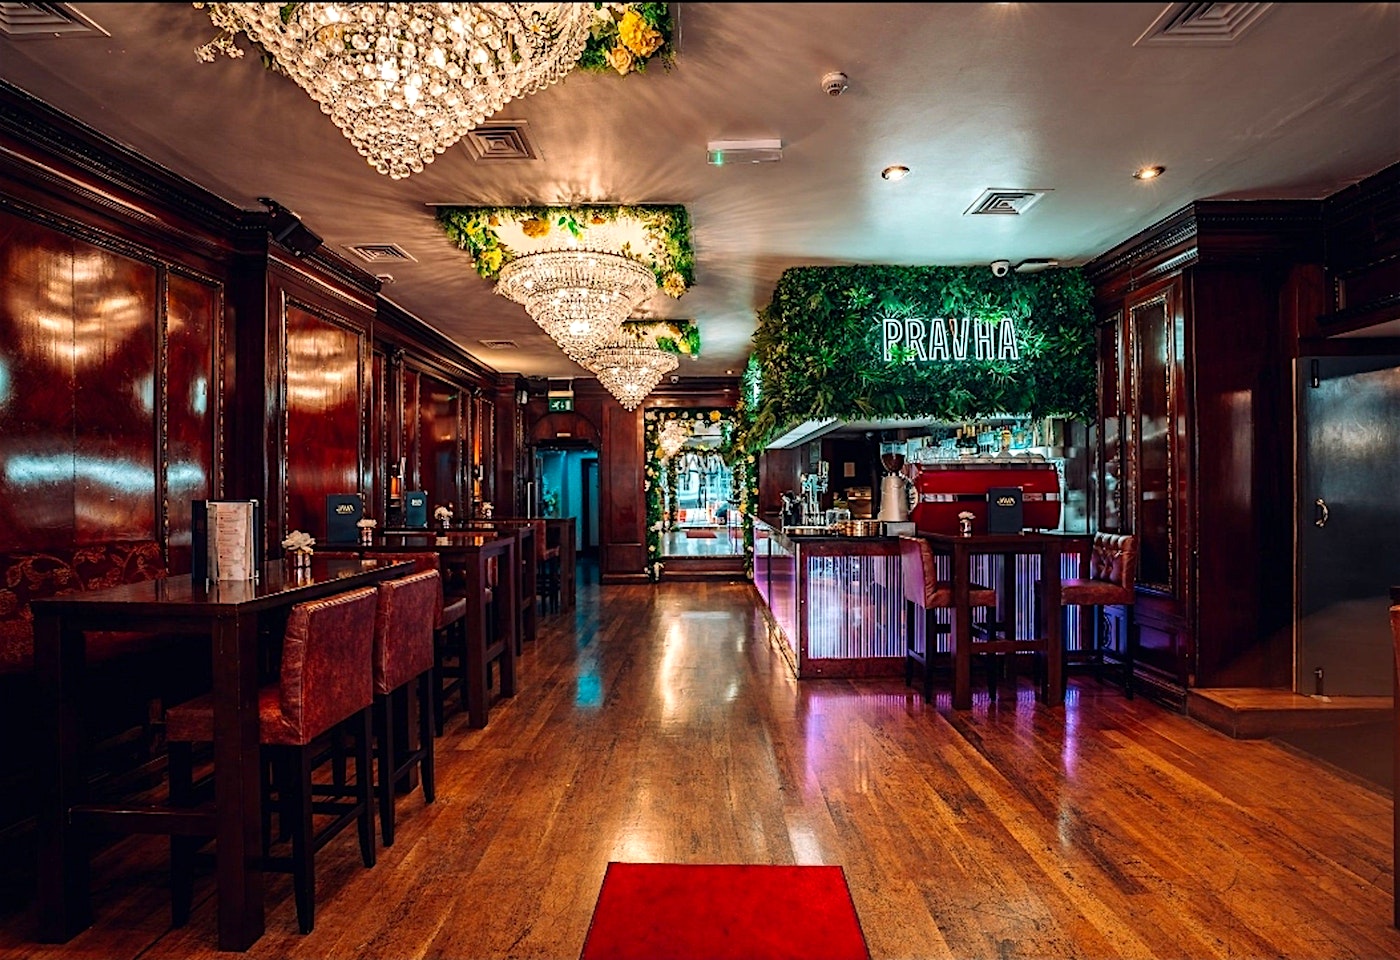 Java Bristol cocktail bar